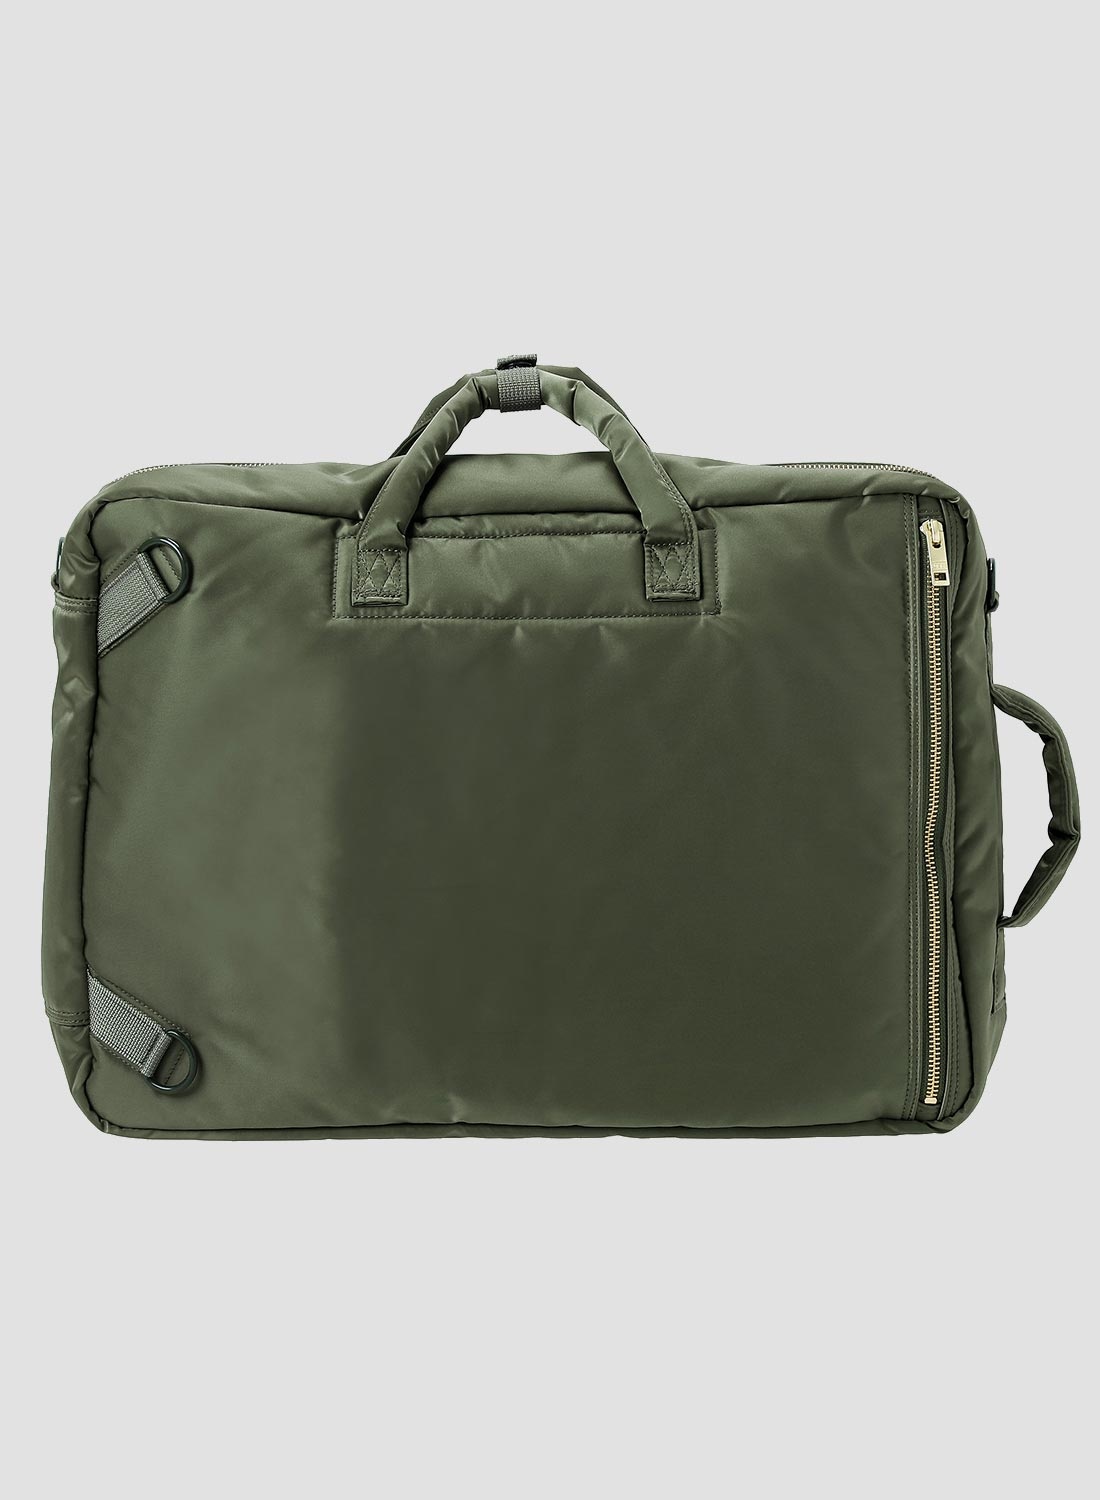 Porter-Yoshida & Co Tanker 3-Way Briefcase in Sage Green - 5